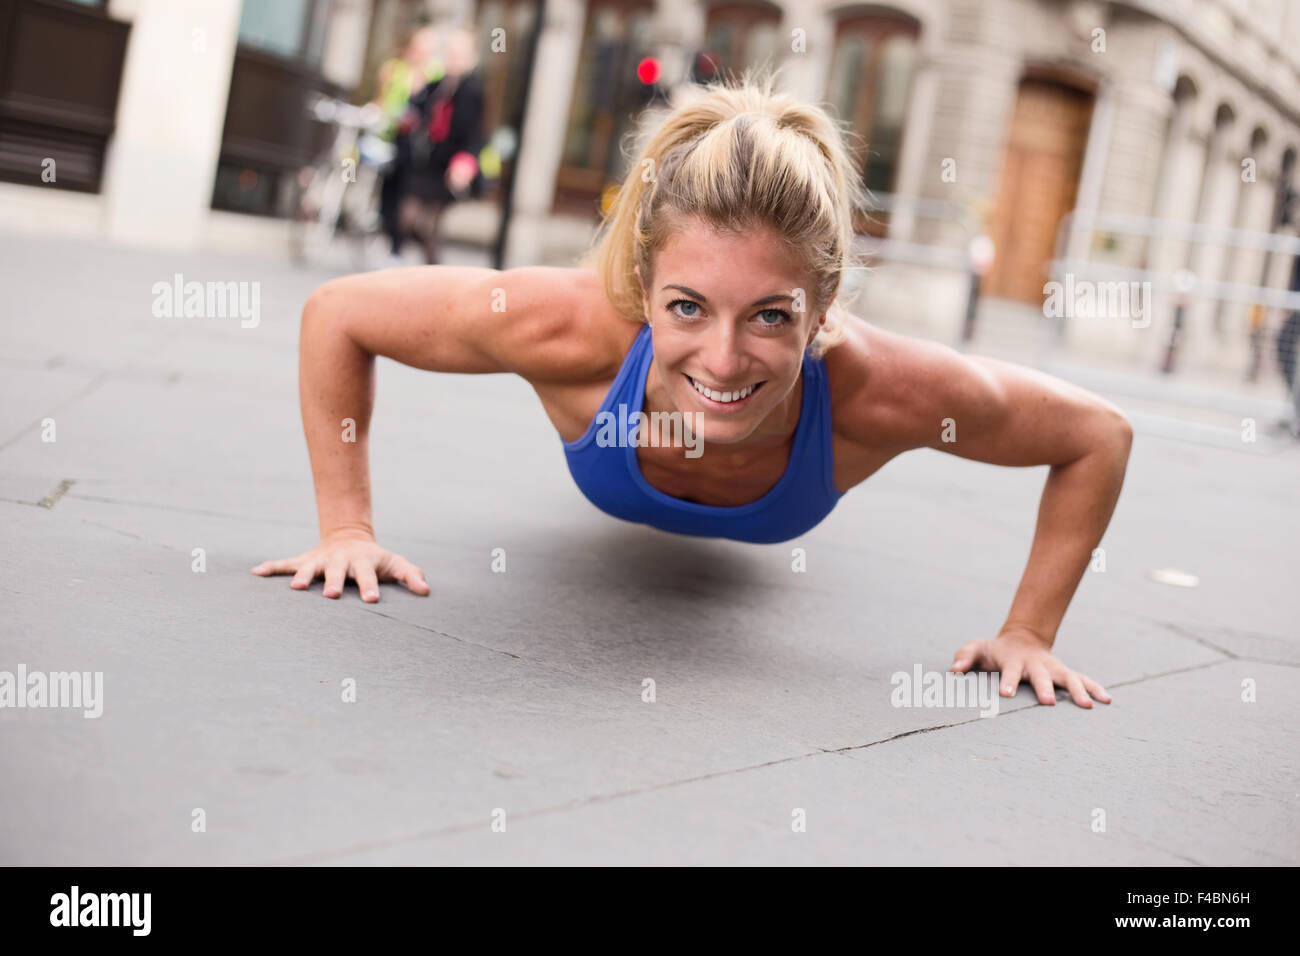 young woman exercising doing push ups Stock Photo